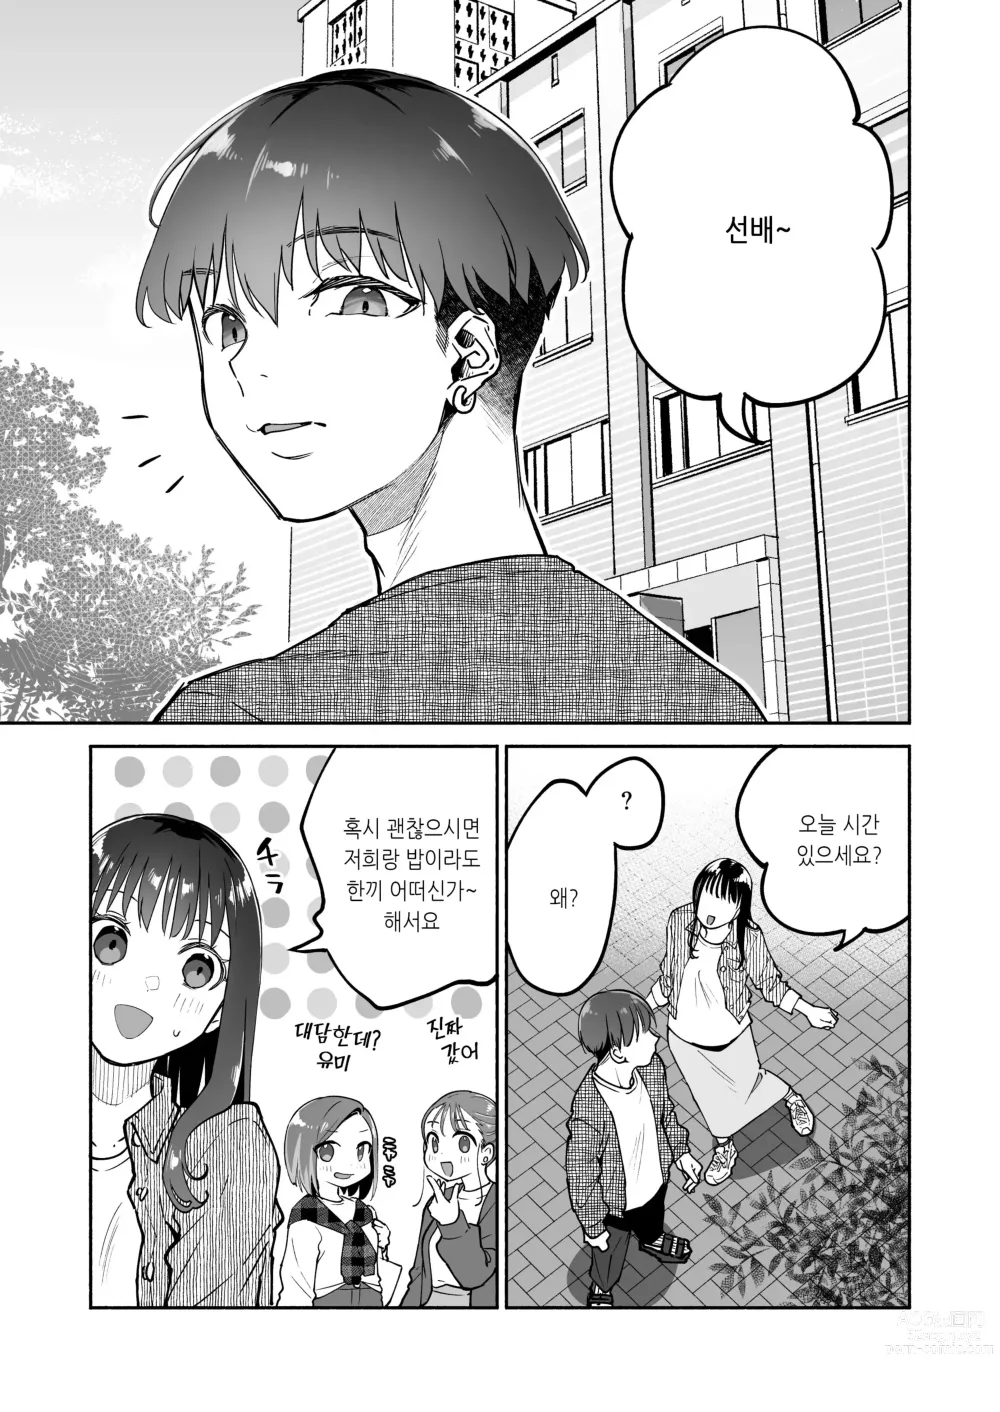 Page 2 of doujinshi 학력, 외모 무엇이든 뒤떨어지는 아저씨 전용 오나홀이 되었습니다.